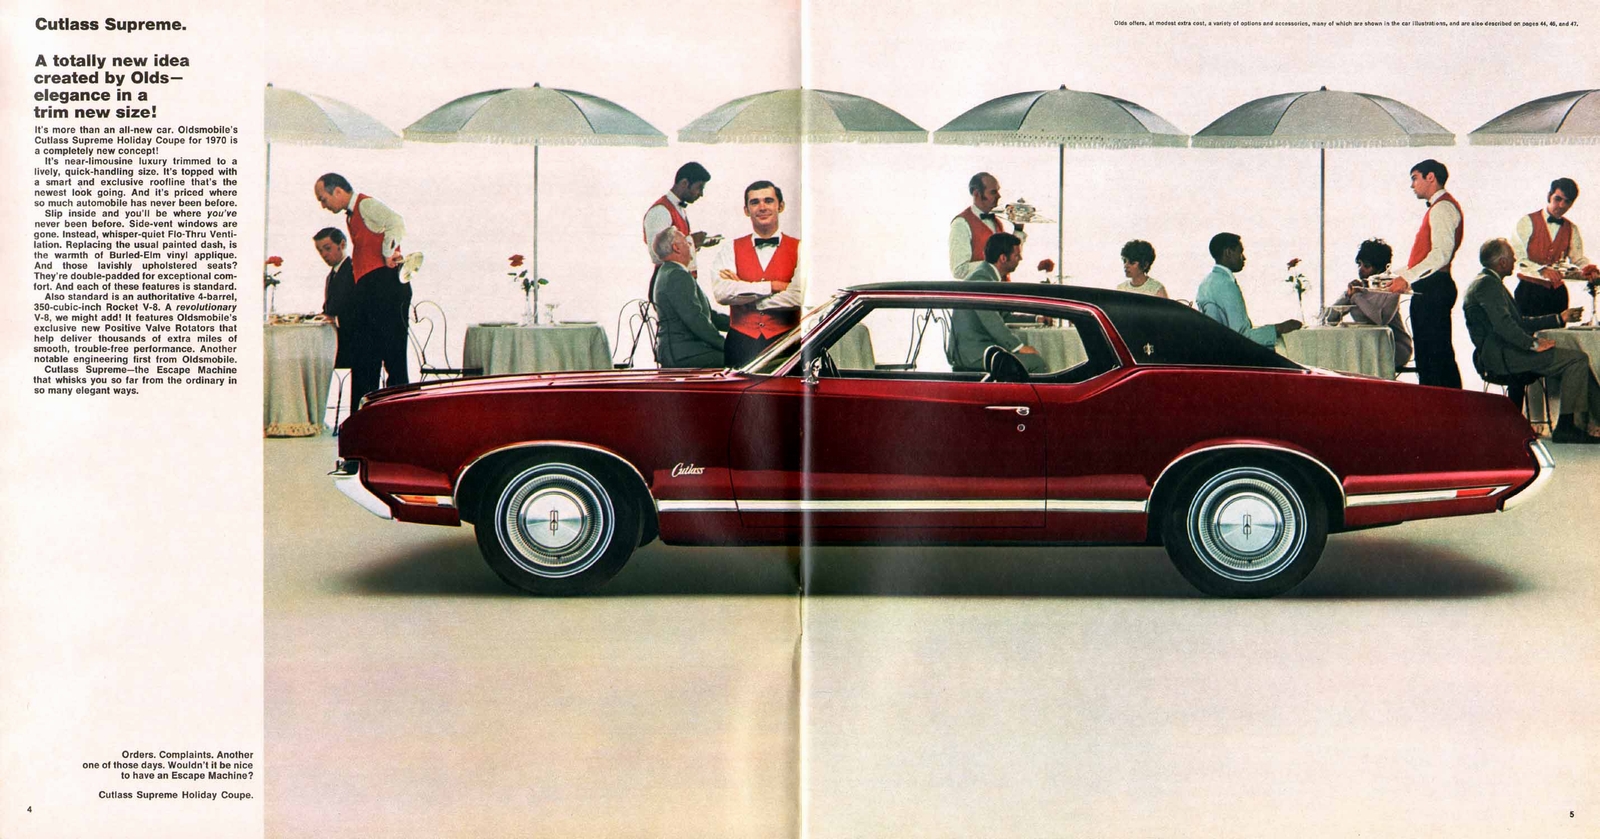 n_1970 Oldsmobile Full Line Prestige (10-69)-04-05.jpg